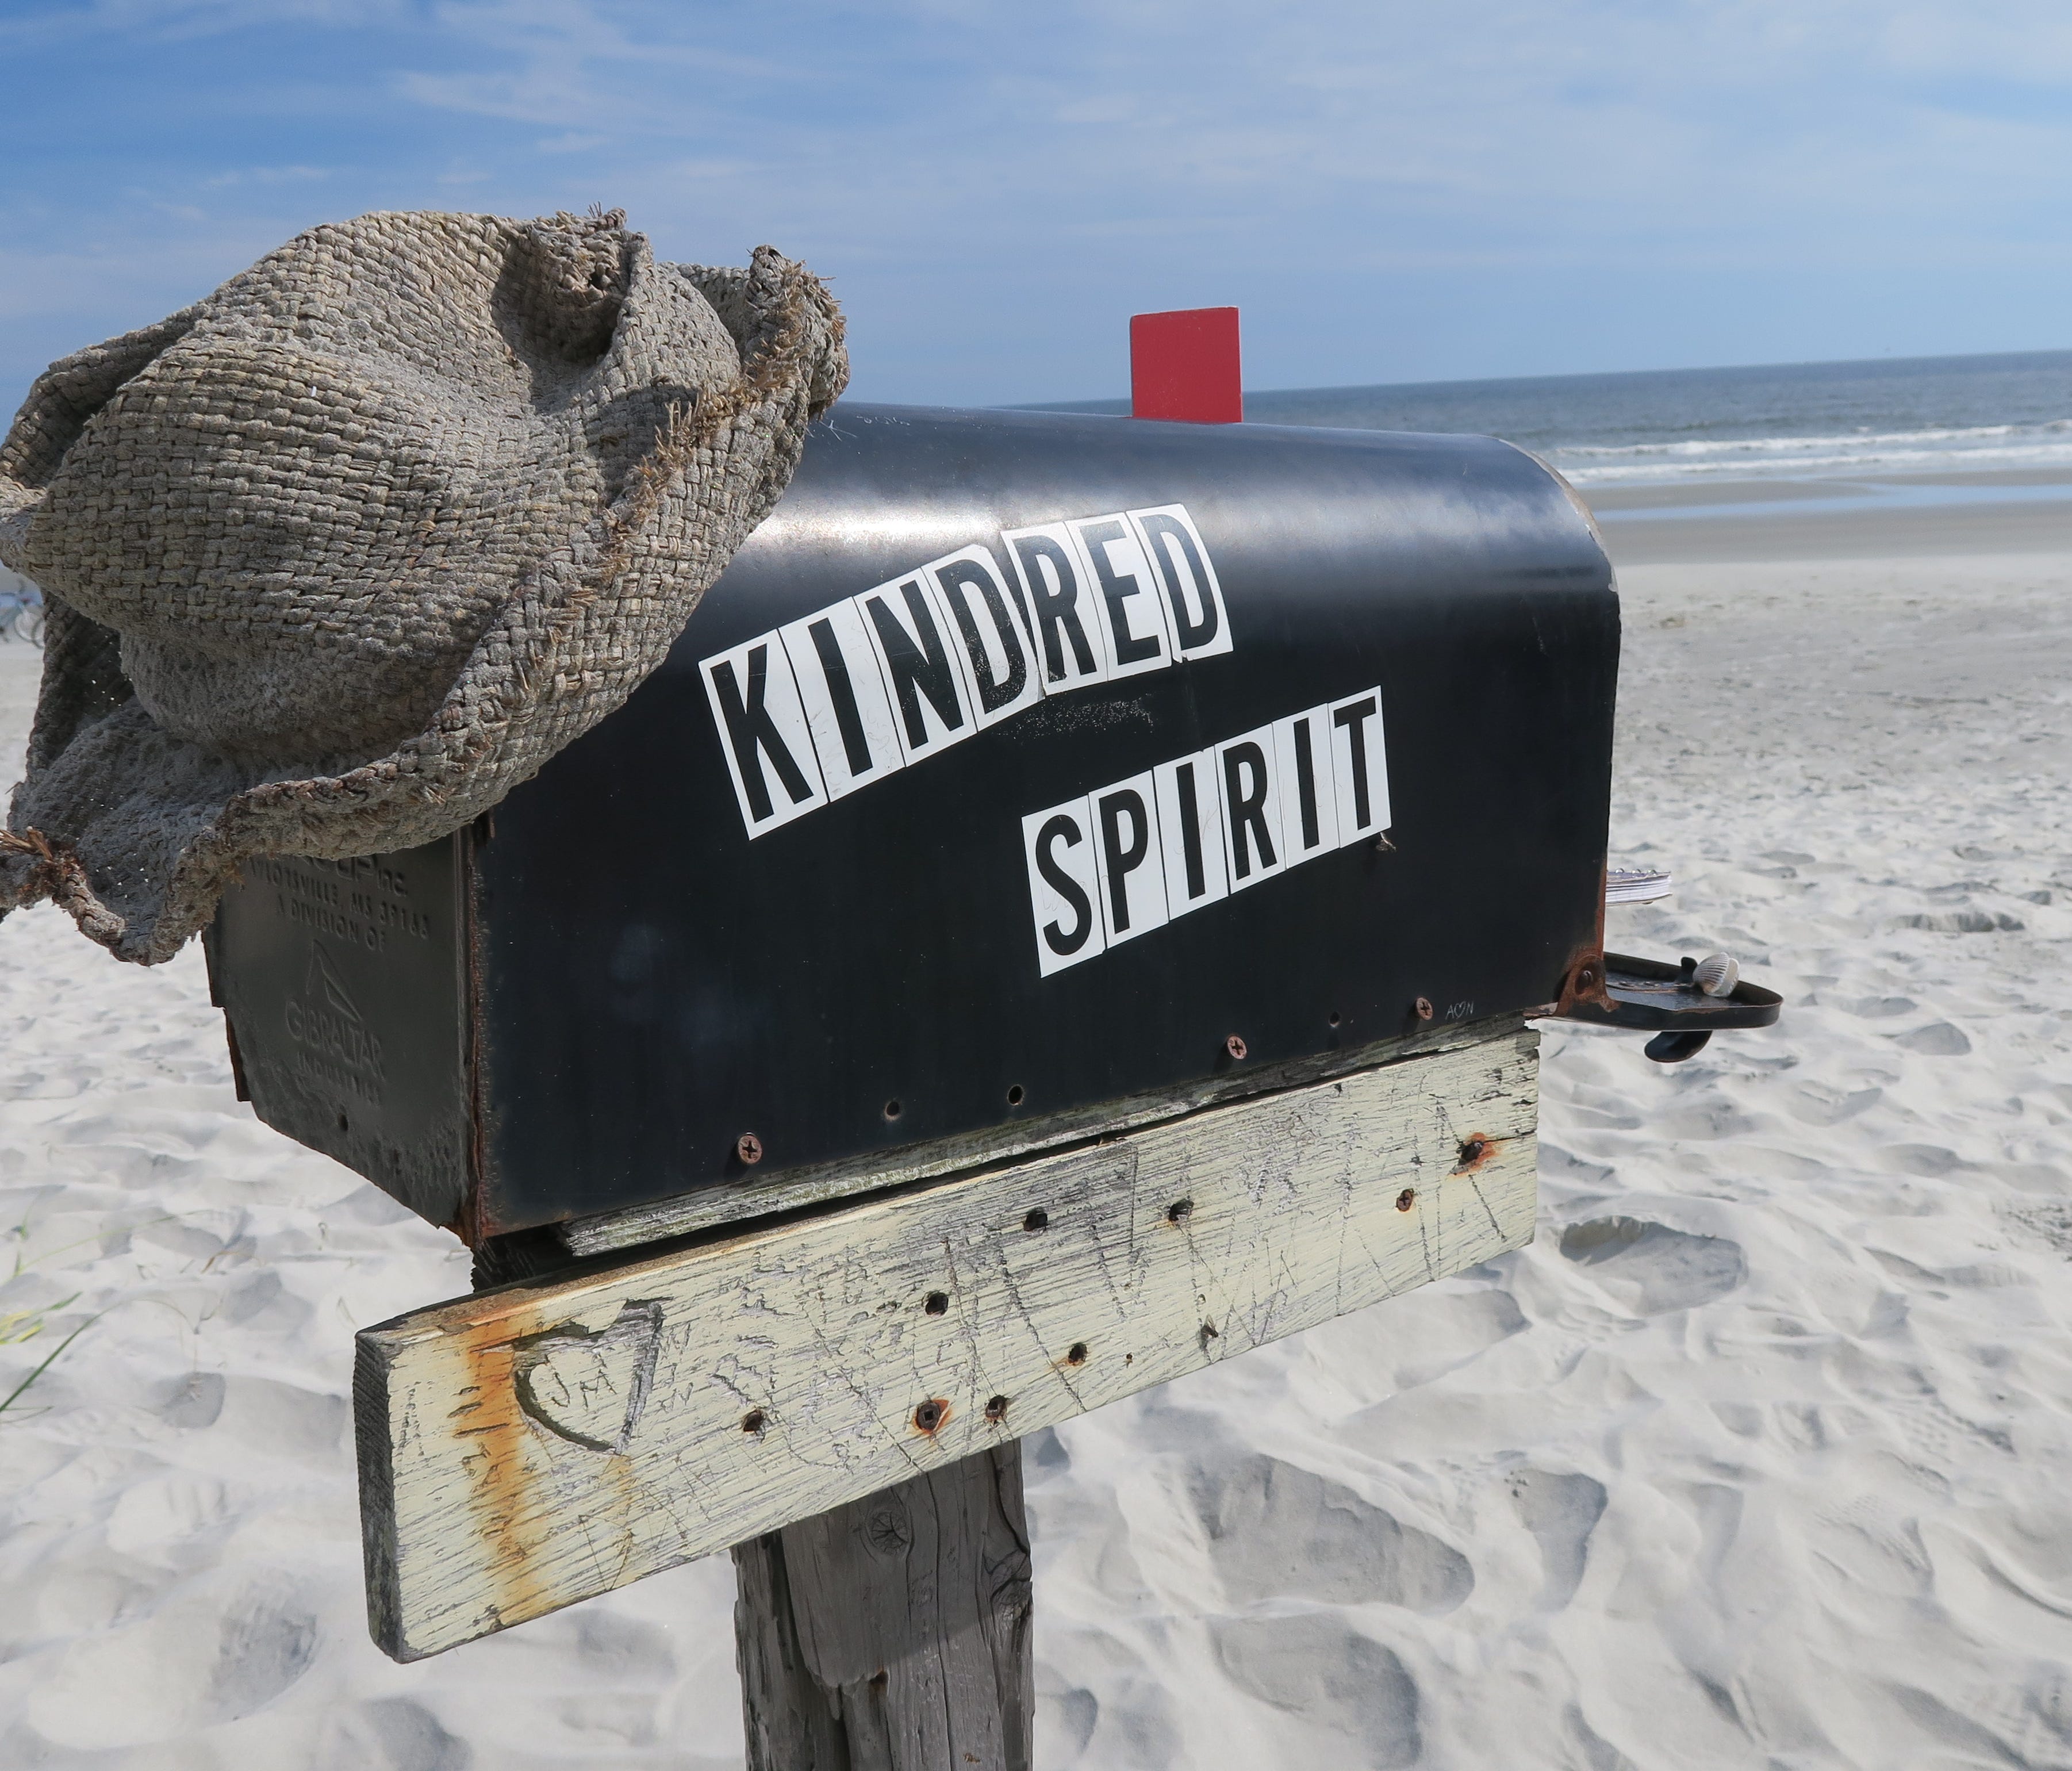 The Kindred Spirit Mailbox can be found on Bird Island in North Carolina's Brunswick Islands.